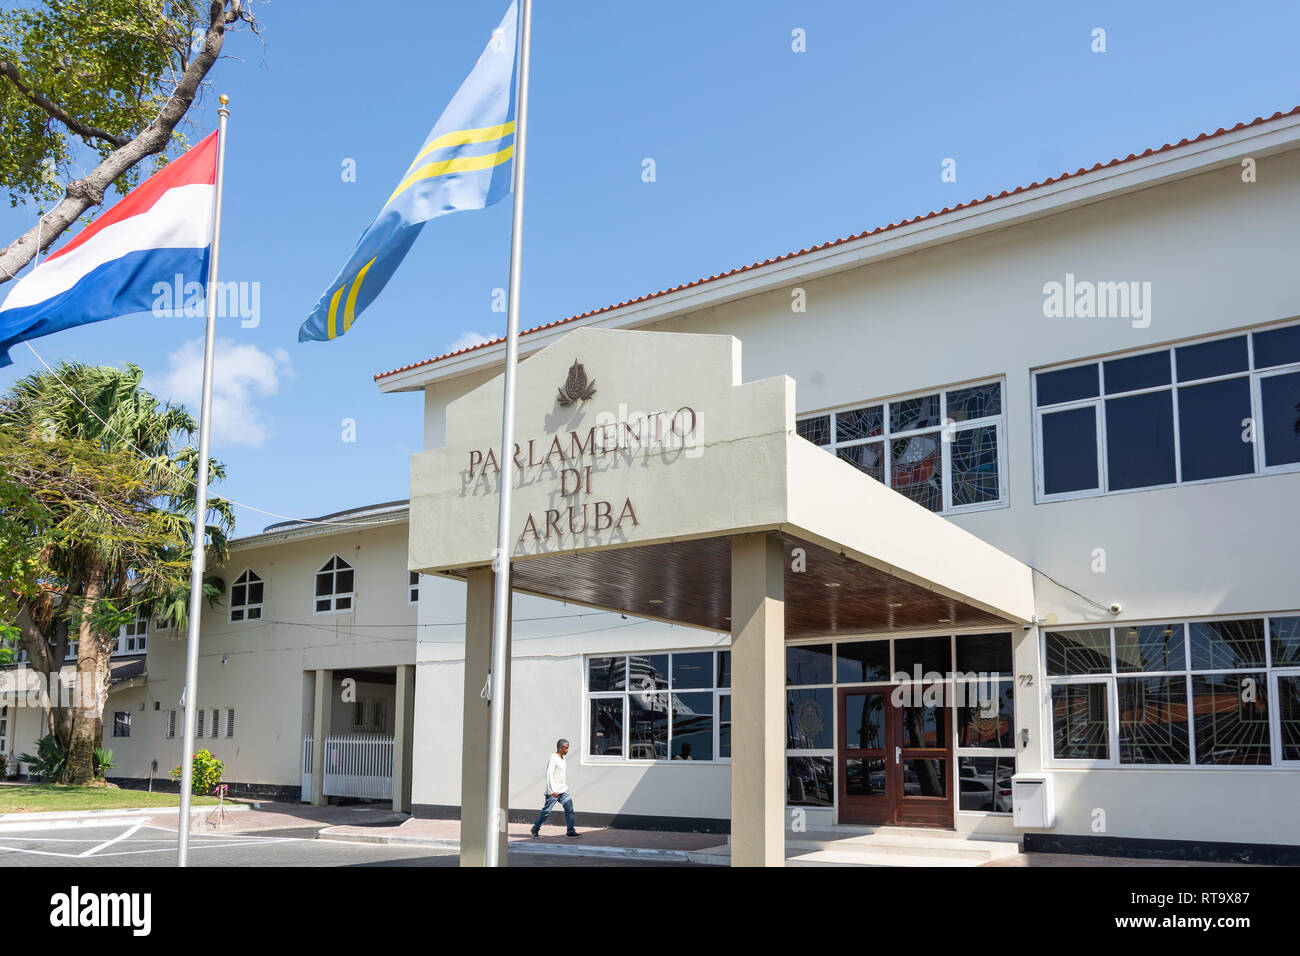 Aruba europeo (Parlamento di Aruba), Lloyd G. Smith Blvd, Oranjestad, Aruba, Isole ABC, Leeward Antilles, dei Caraibi Foto Stock